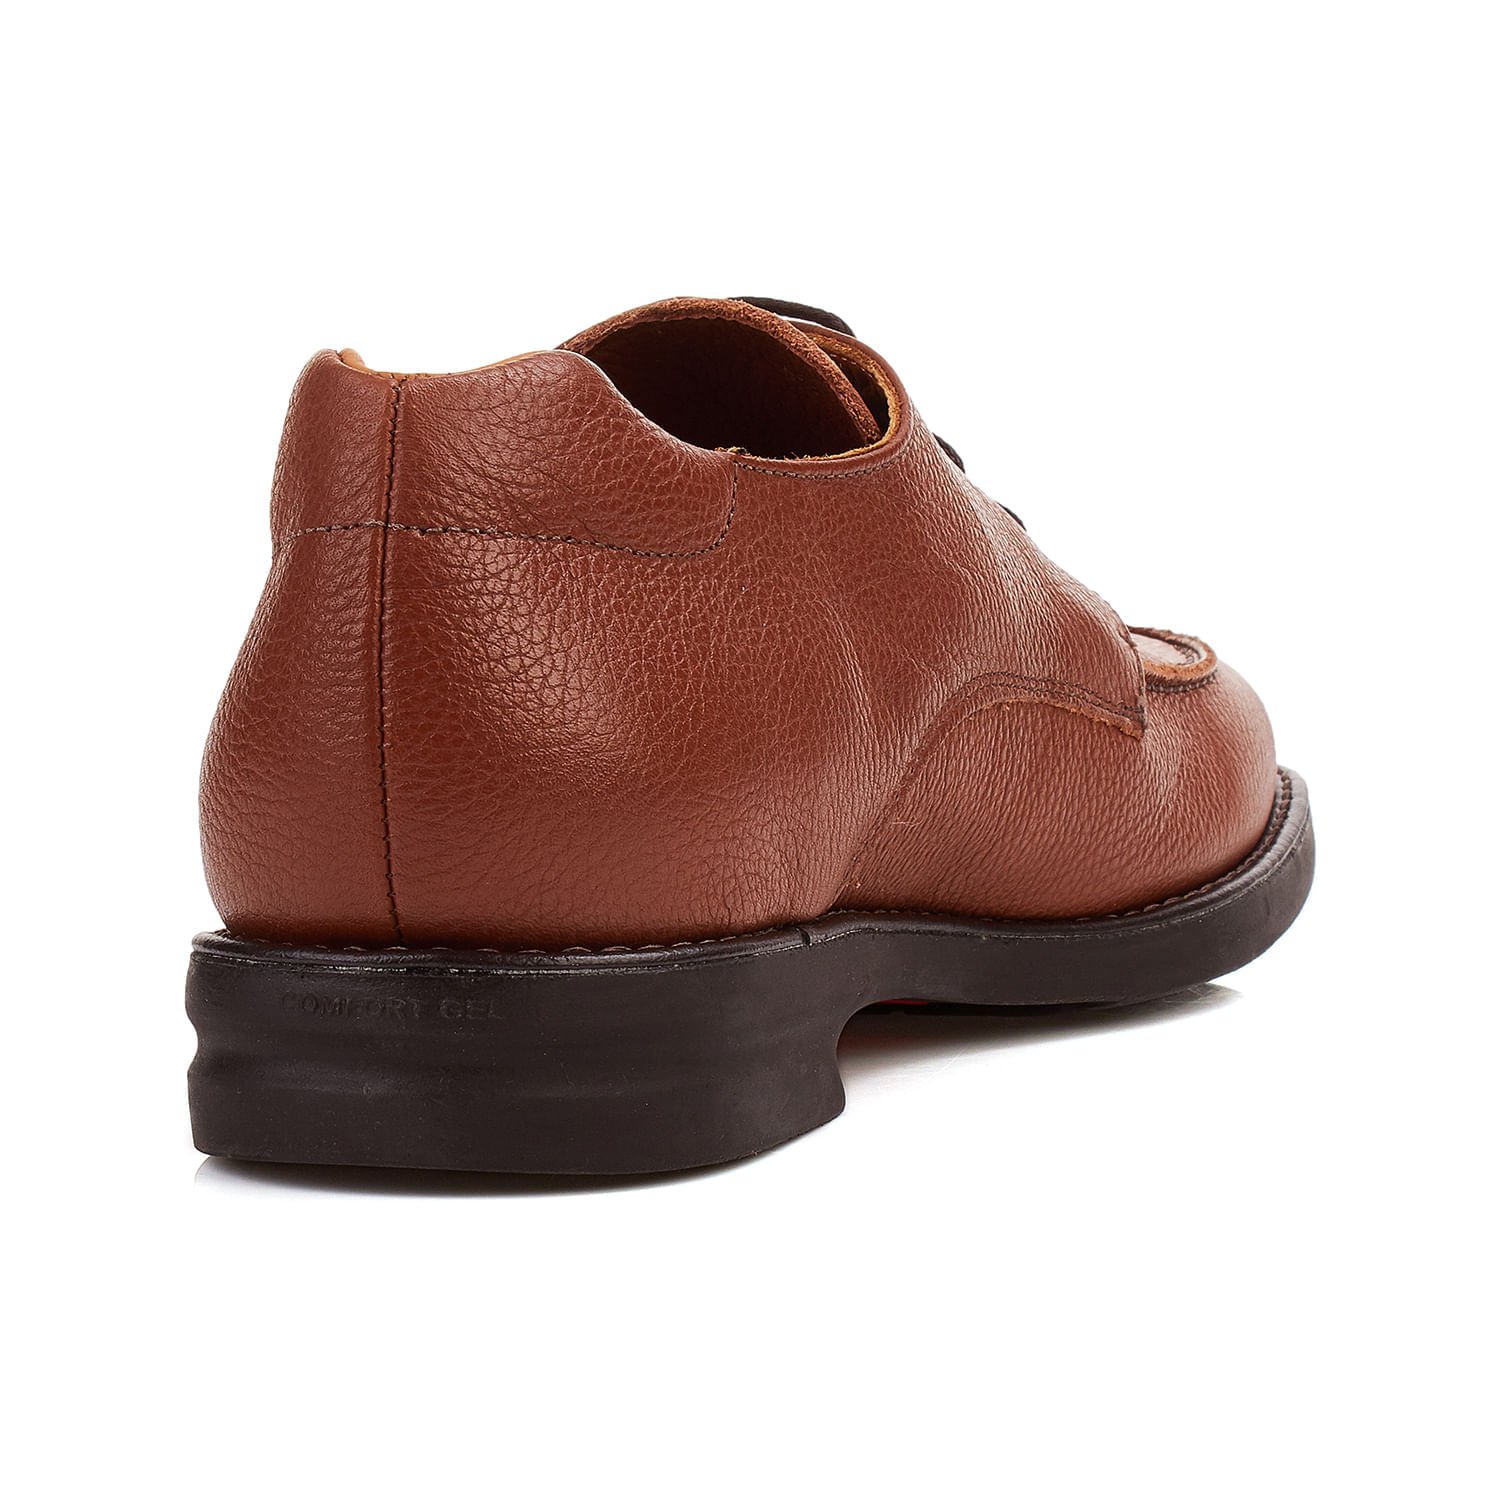 Sapato Social Floater Confort - Conhaque Marrom 2